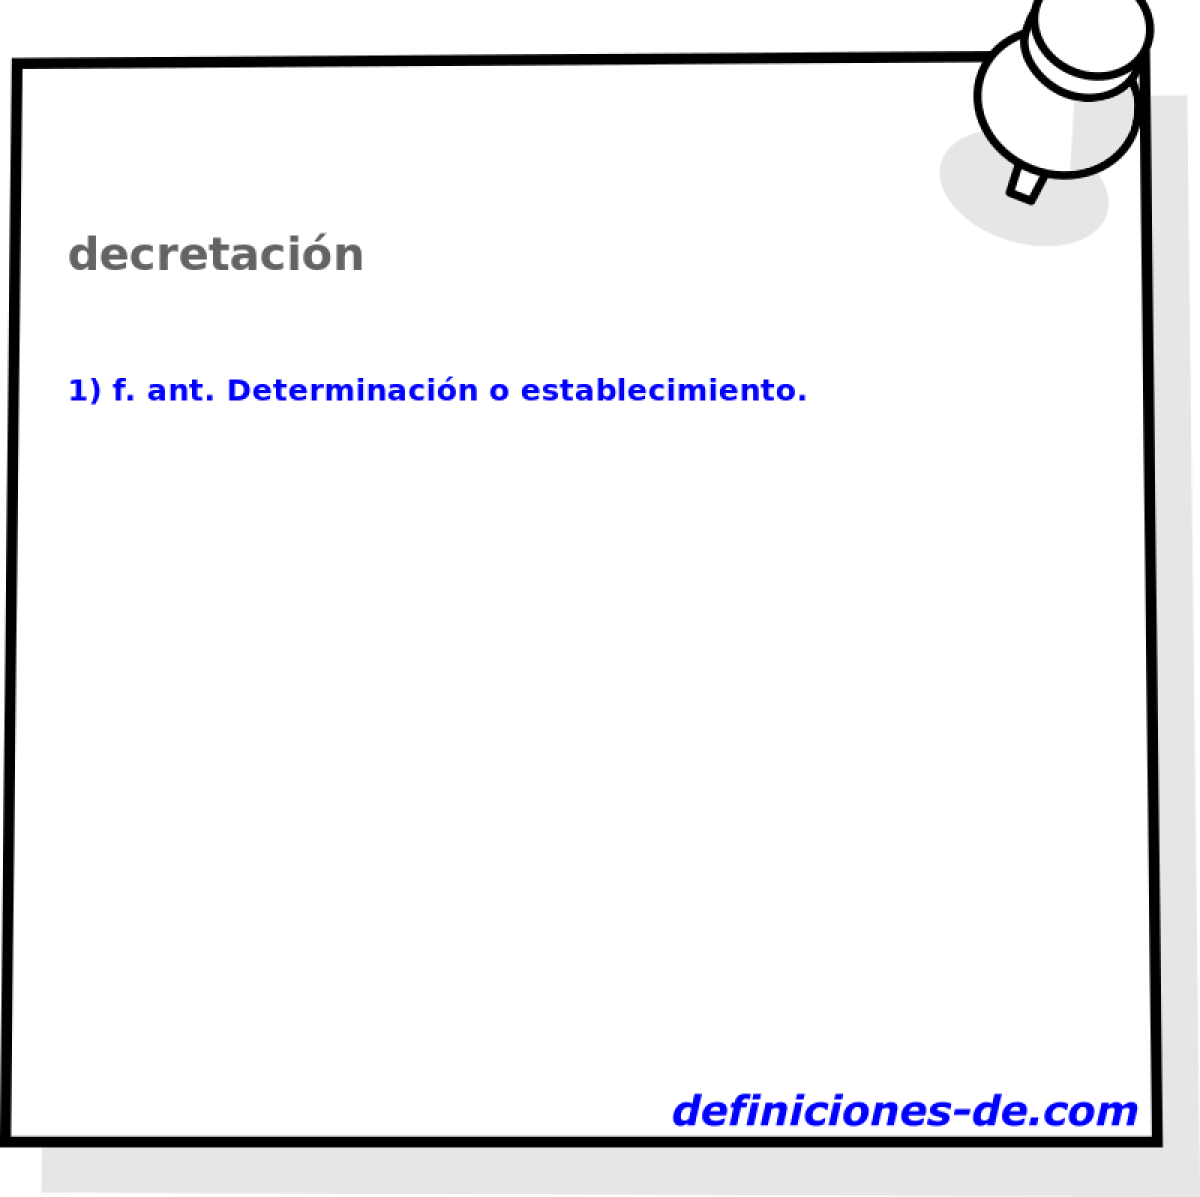 decretacin 